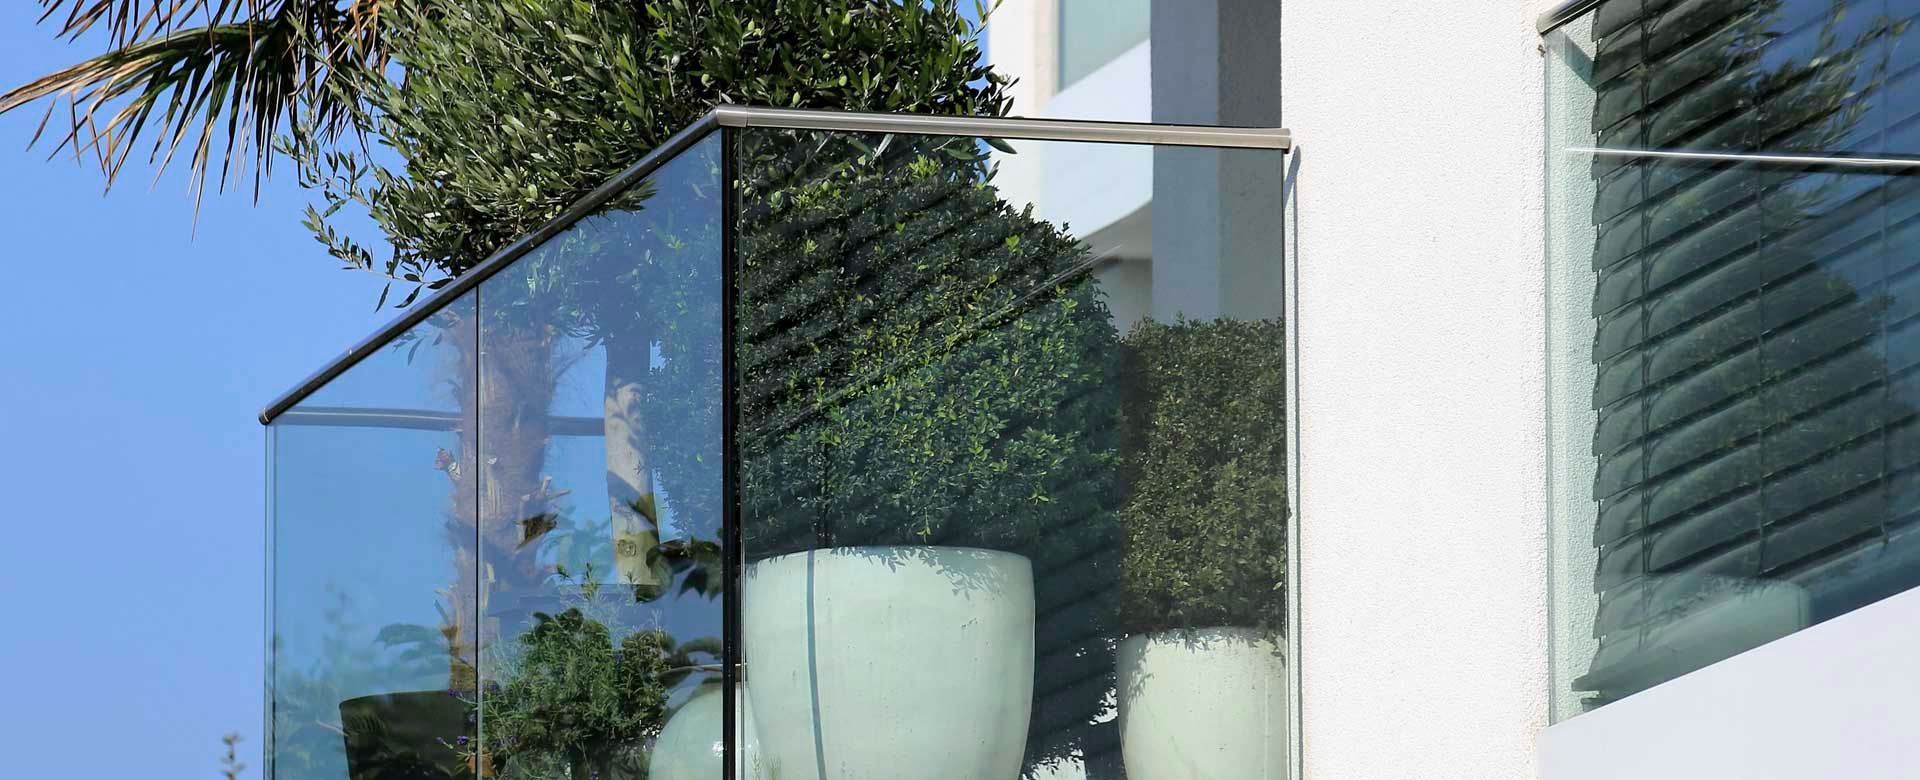 Mirador de vidrio